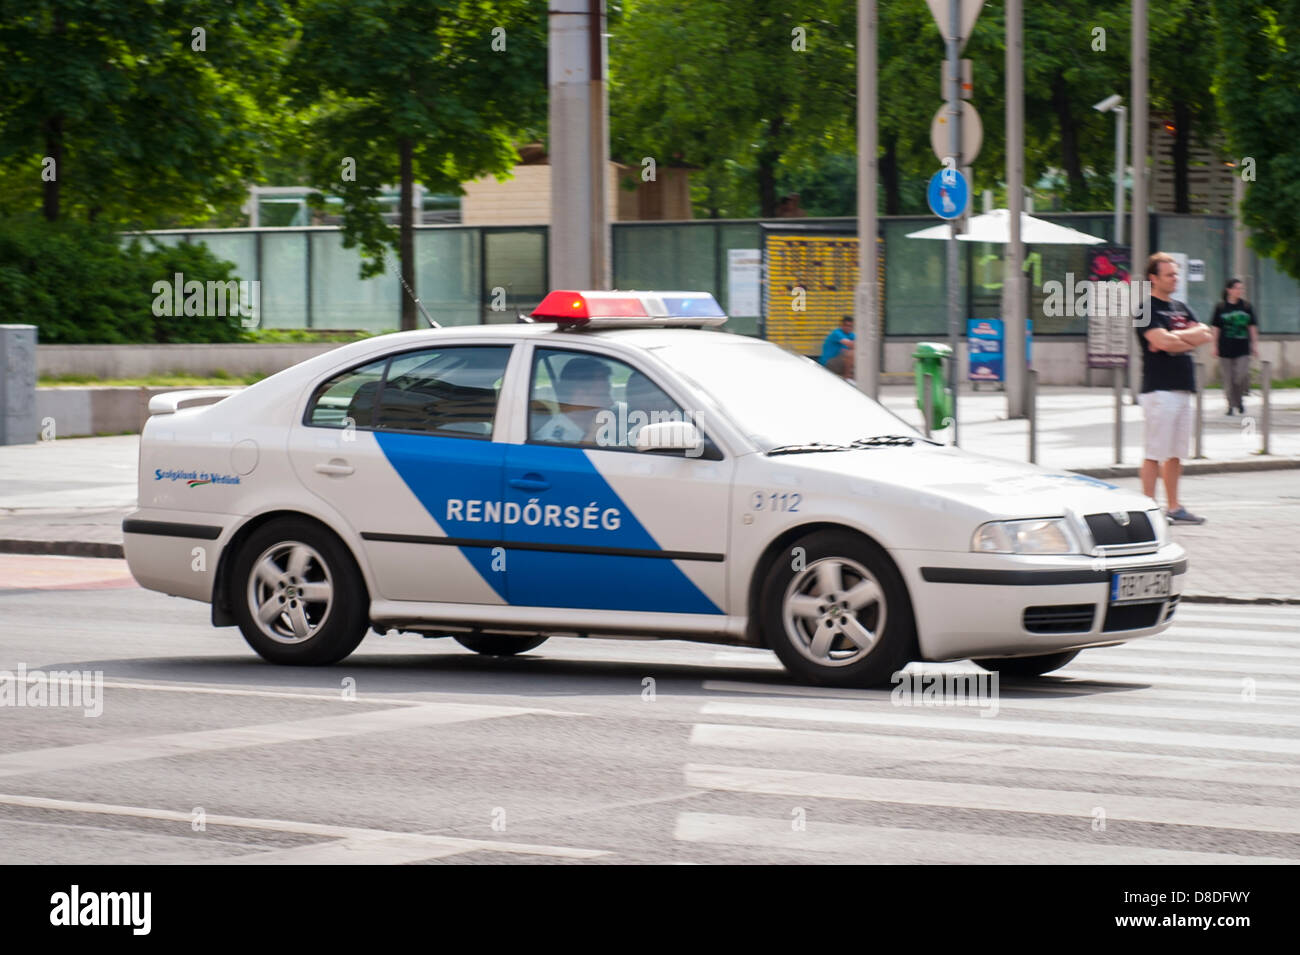 Hungary Budapest moving white blue police cop car Rendorseg on road street scene Stock Photo